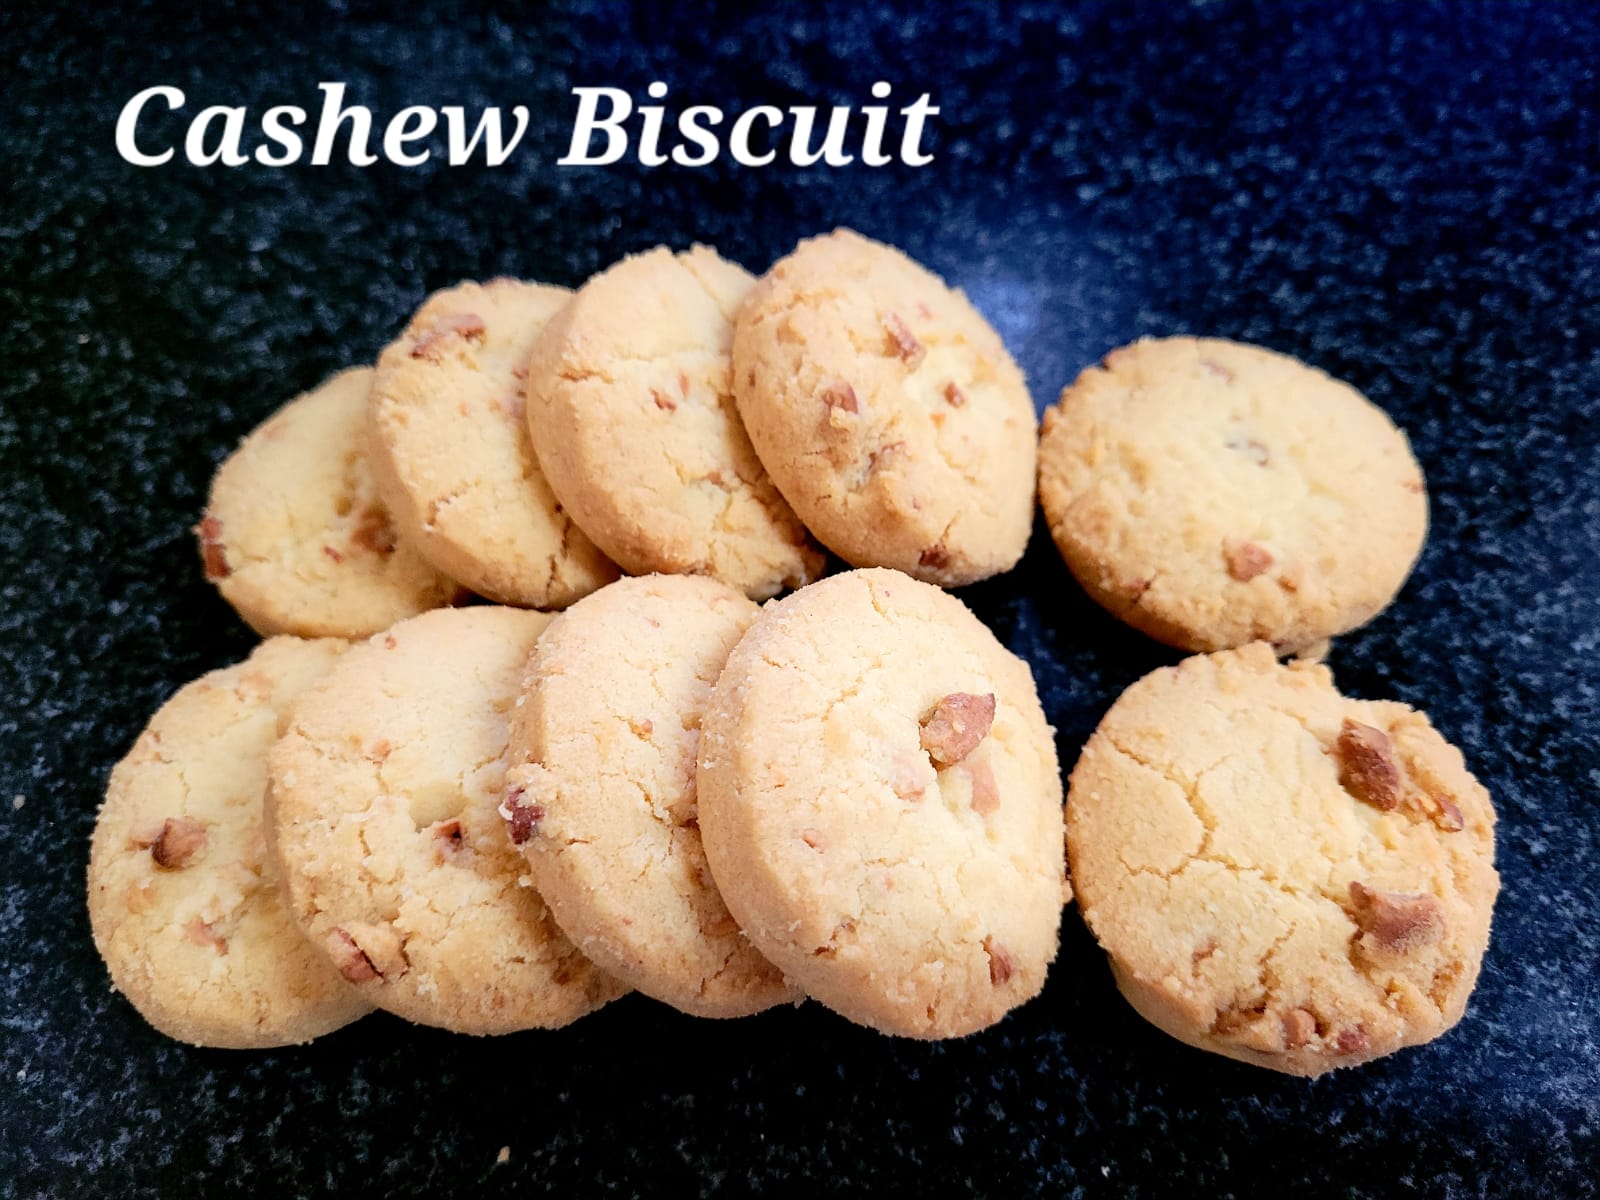 Cashew biscuits